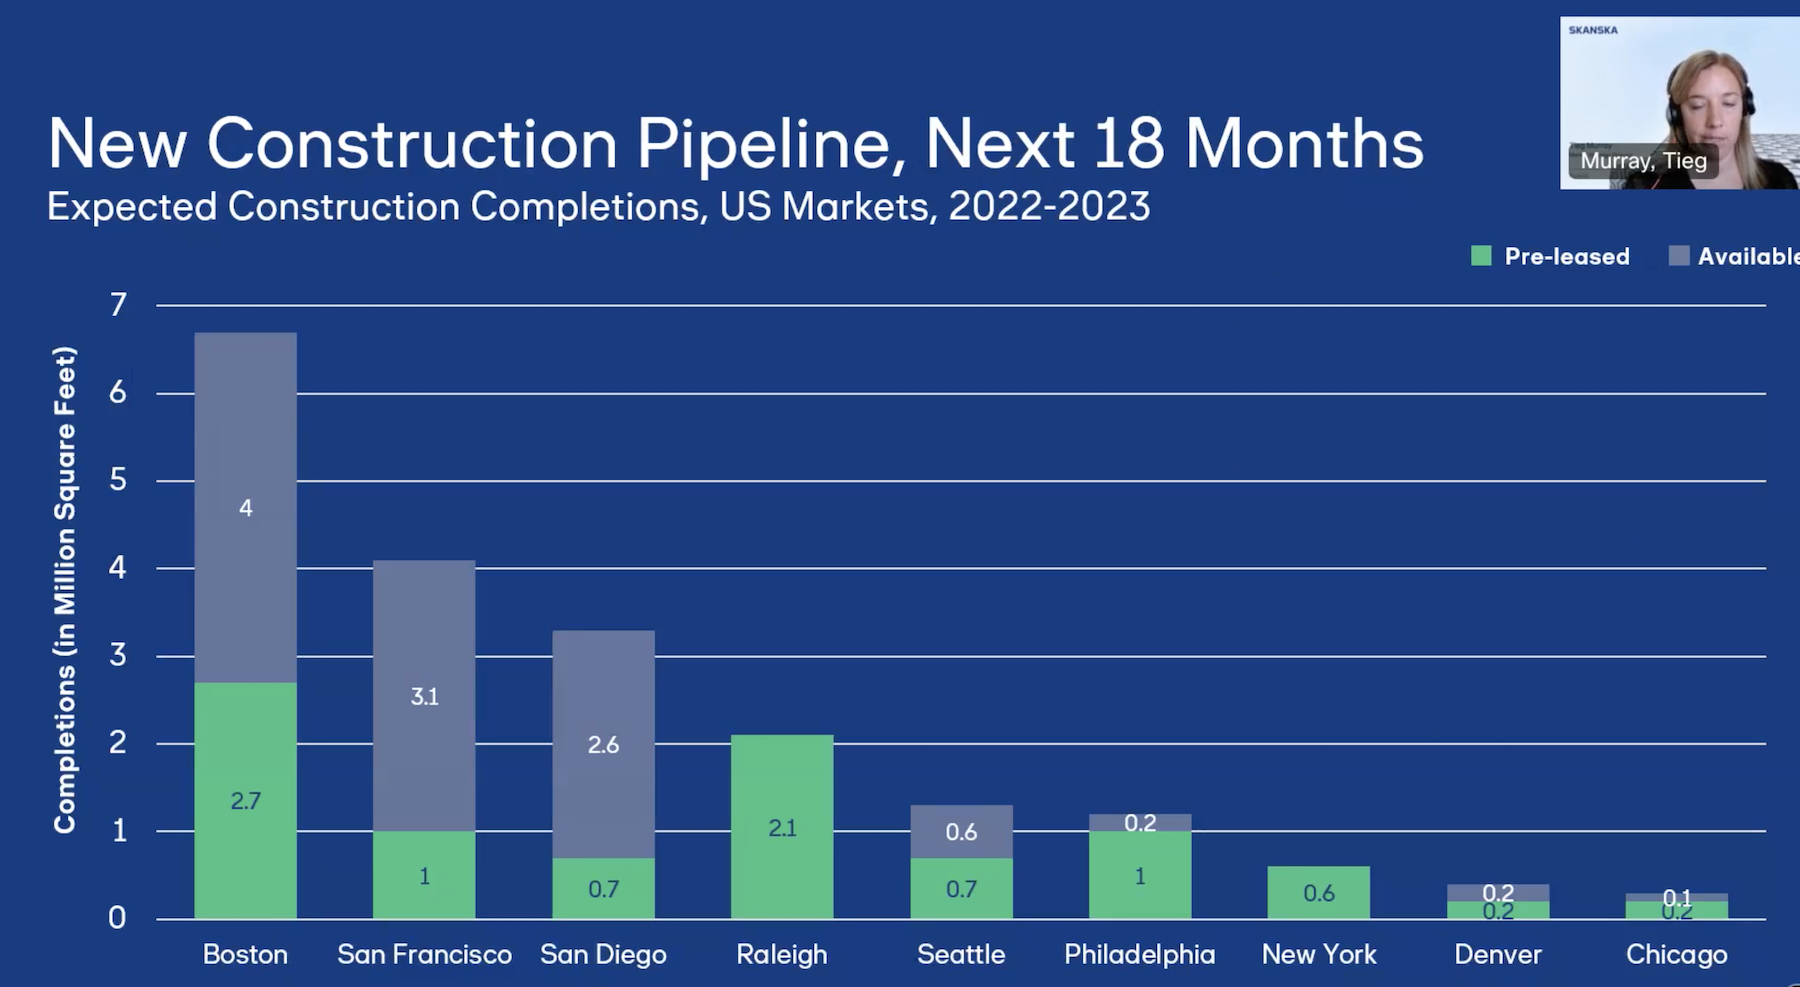 S+T Construction demand for next 18 months